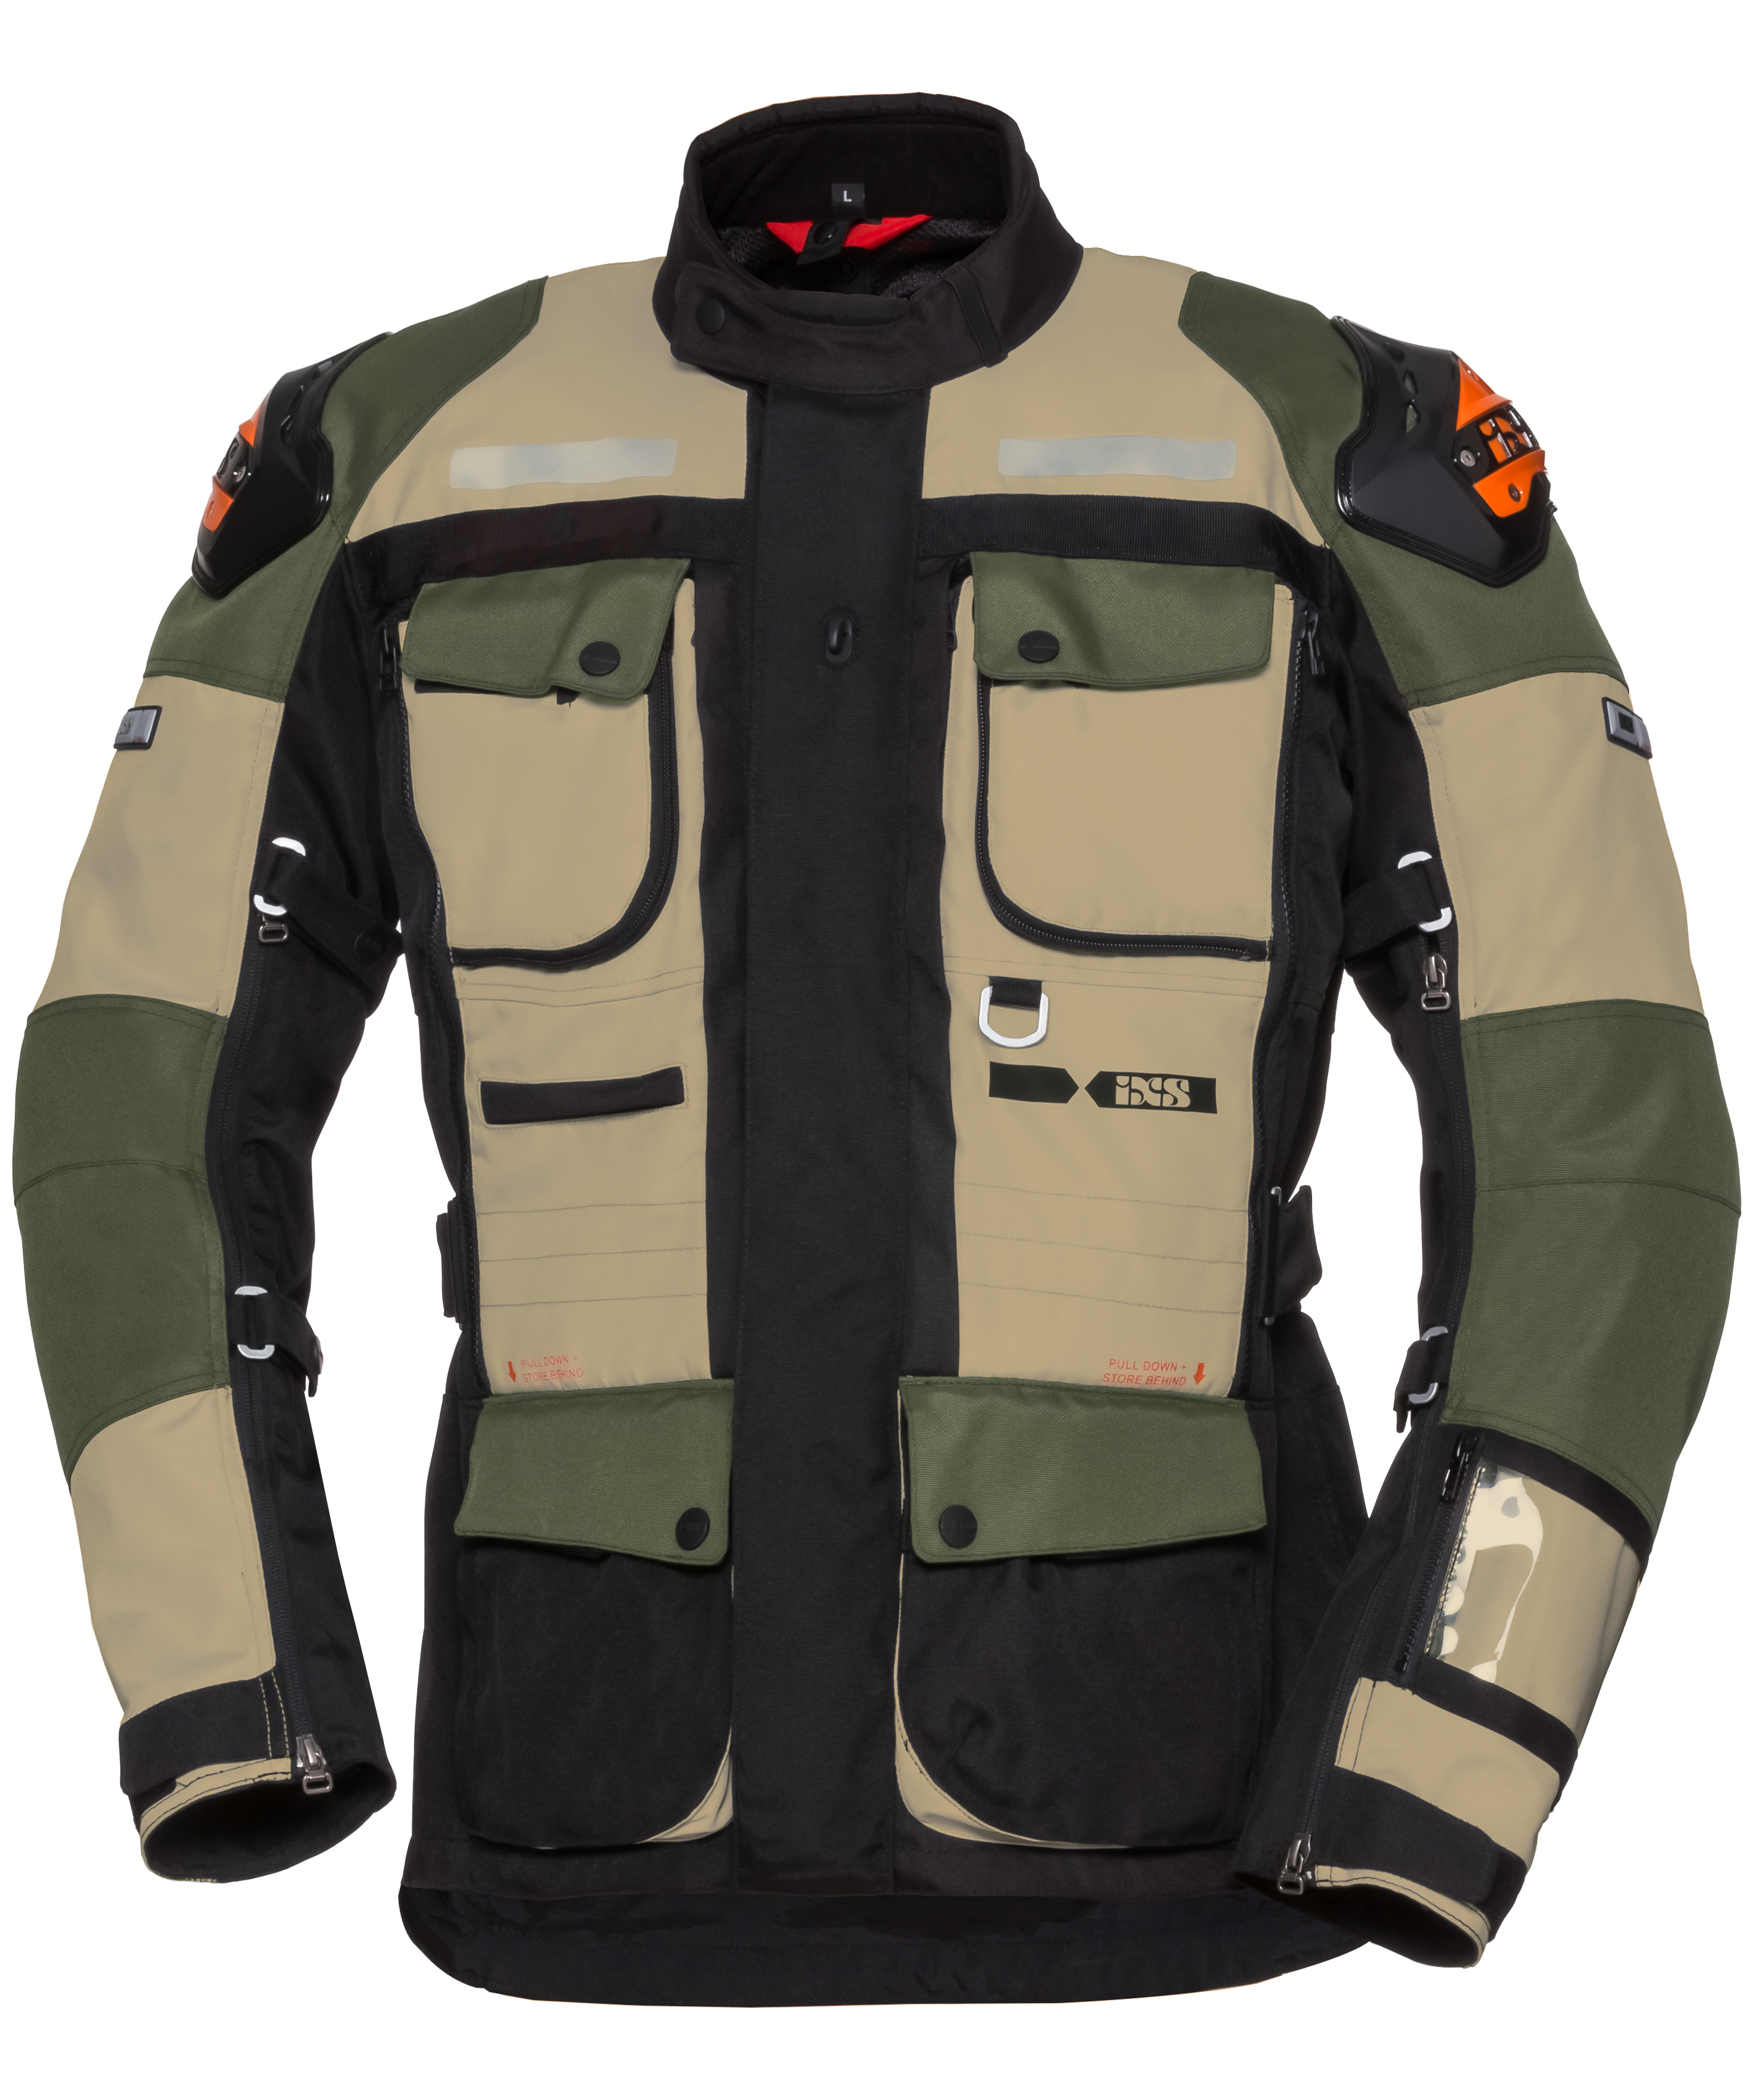 Montevideo III motorcycle jacket concept by iXS